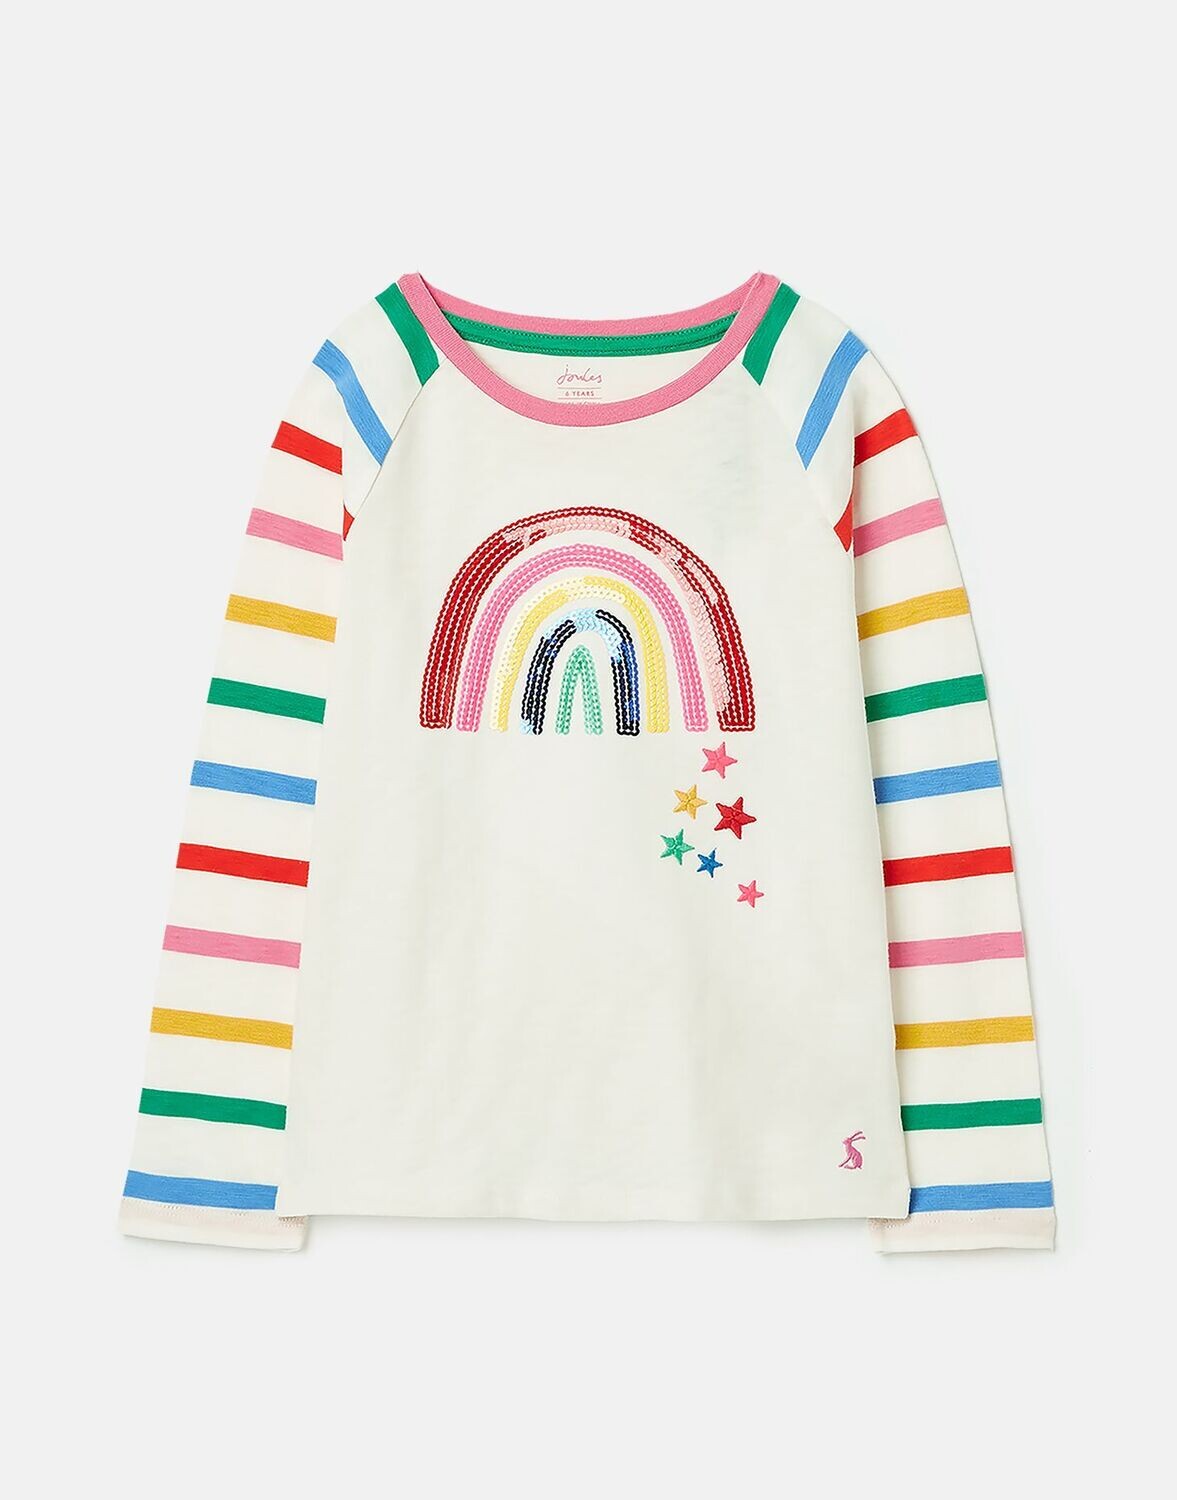 Lorna Rainbow Shirt